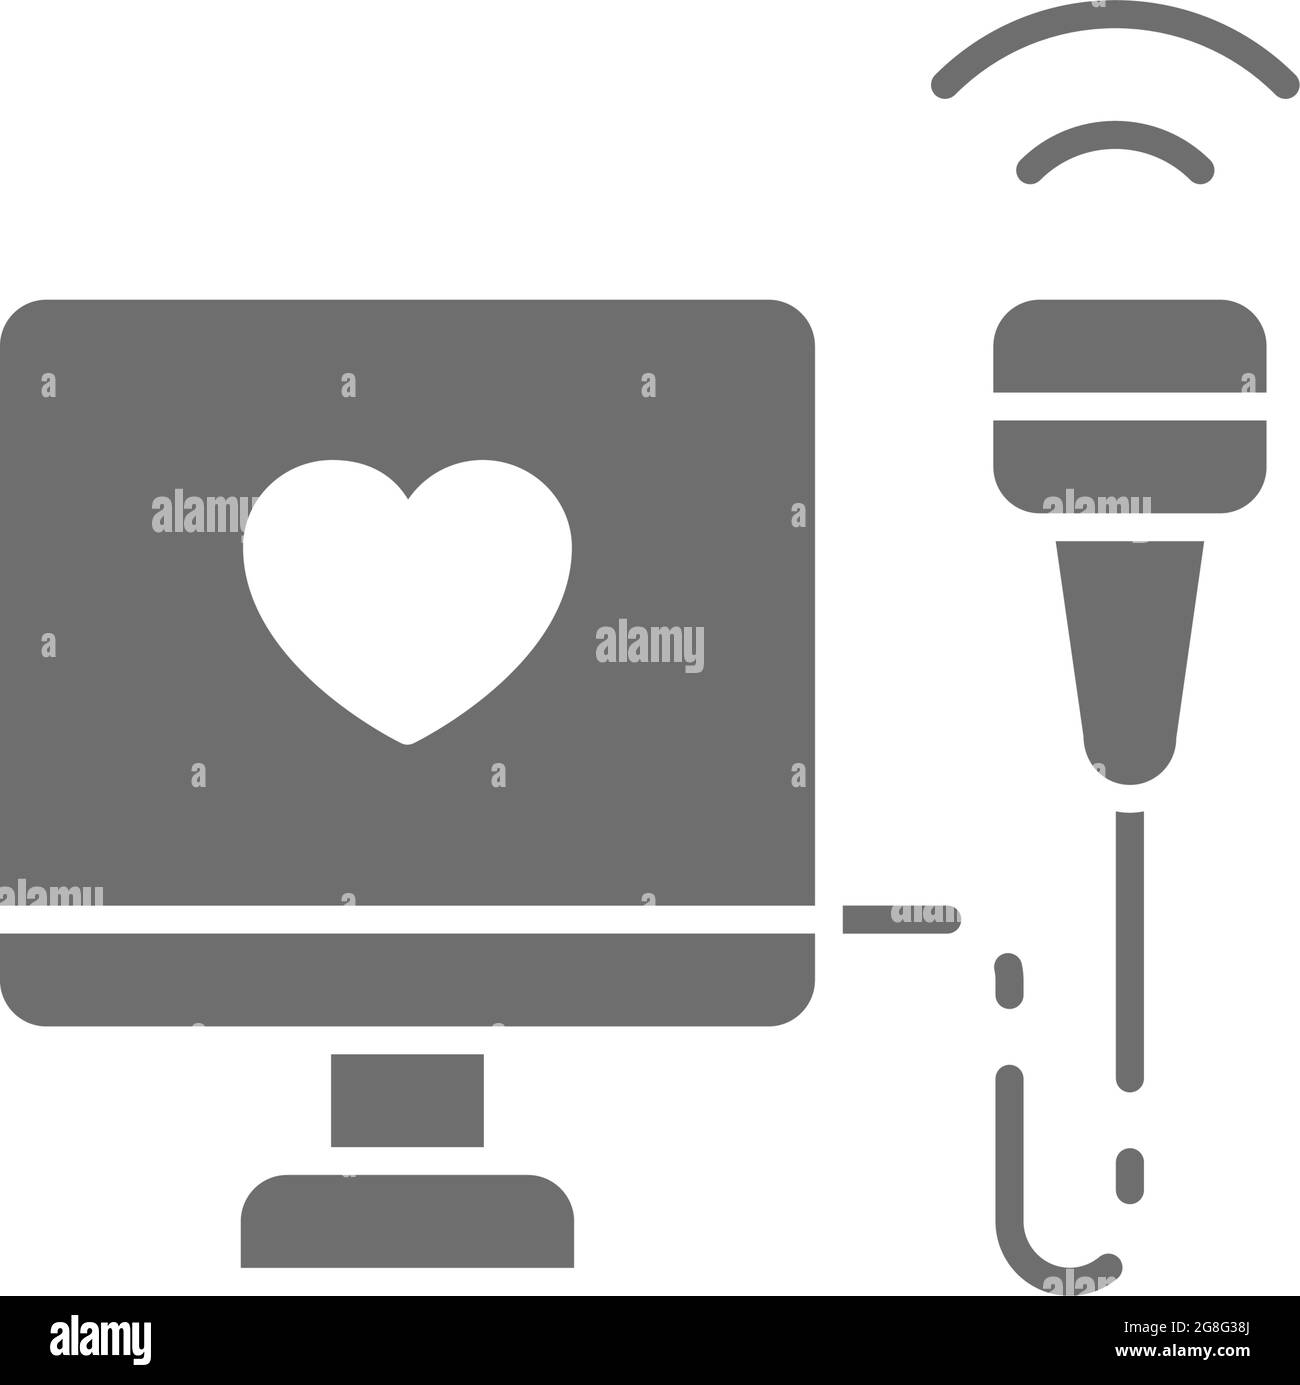 Echocardiogram, heart ultrasound grey icon. Isolated on white background Stock Vector